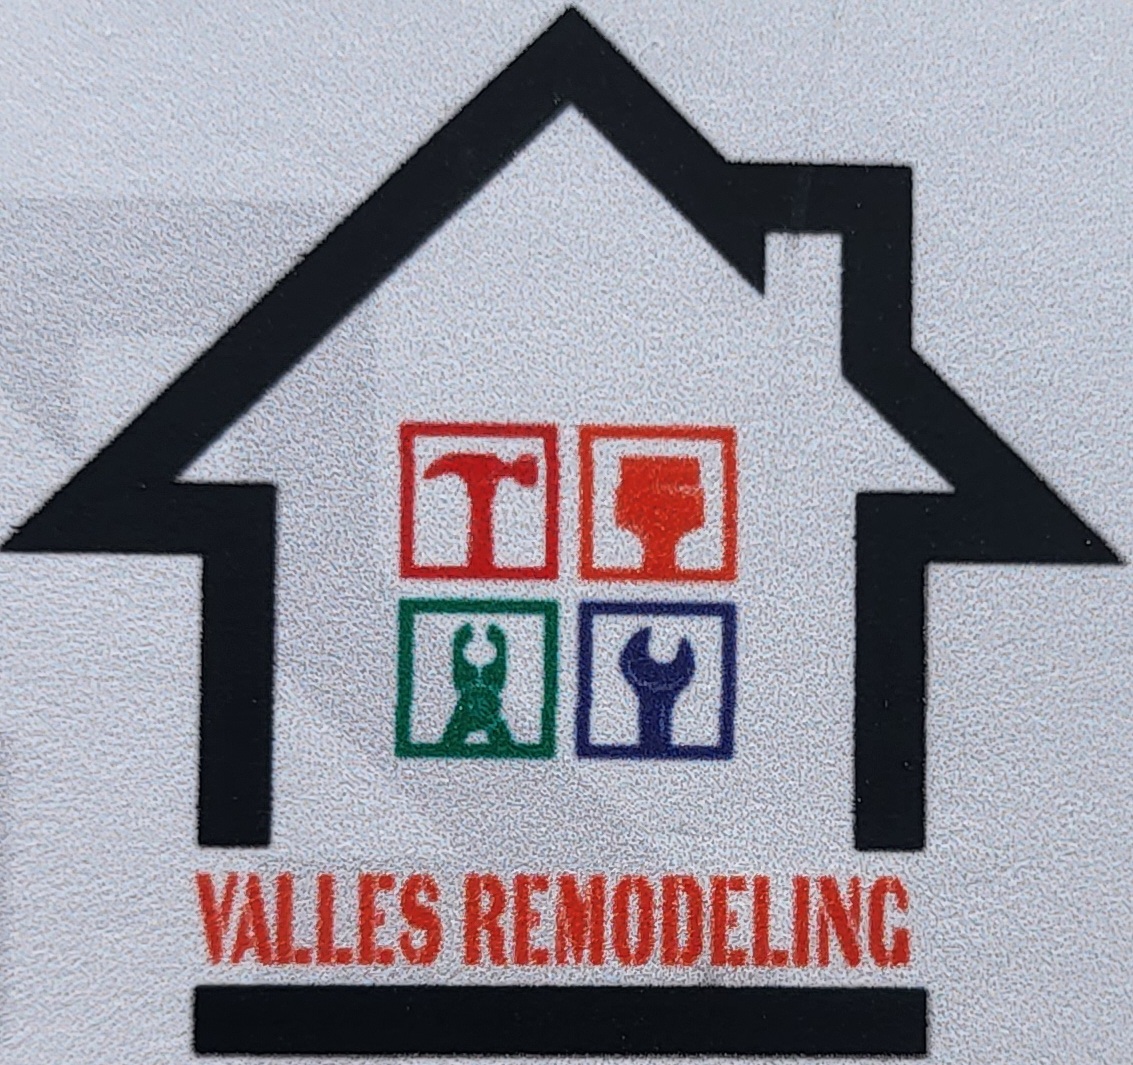 Valles Remodeling Logo